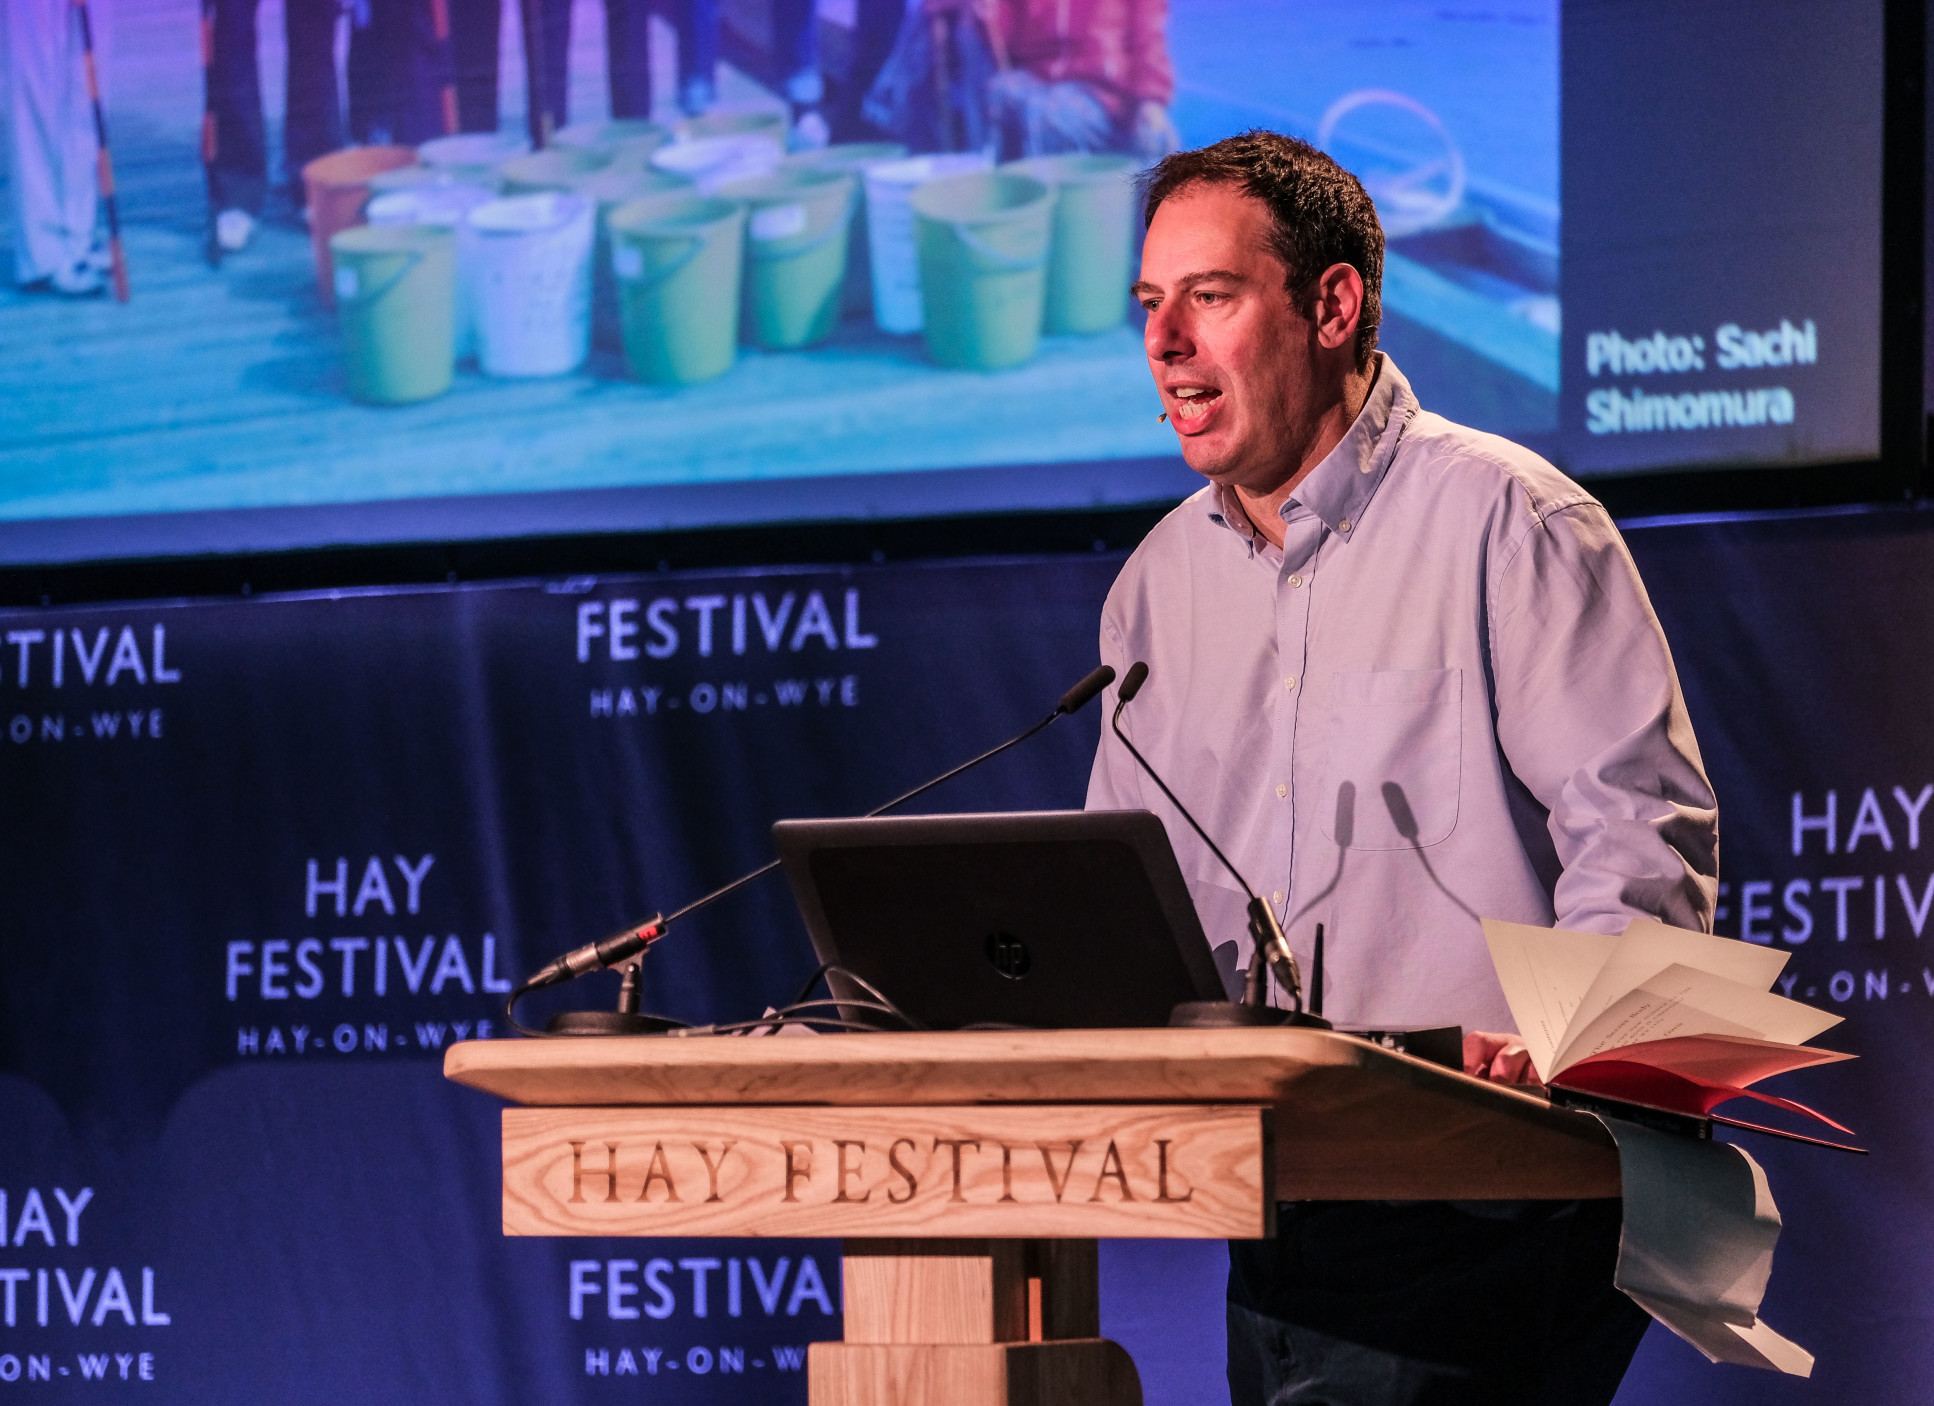 Professor Dan Davis presenting at the Hay Festival 2022